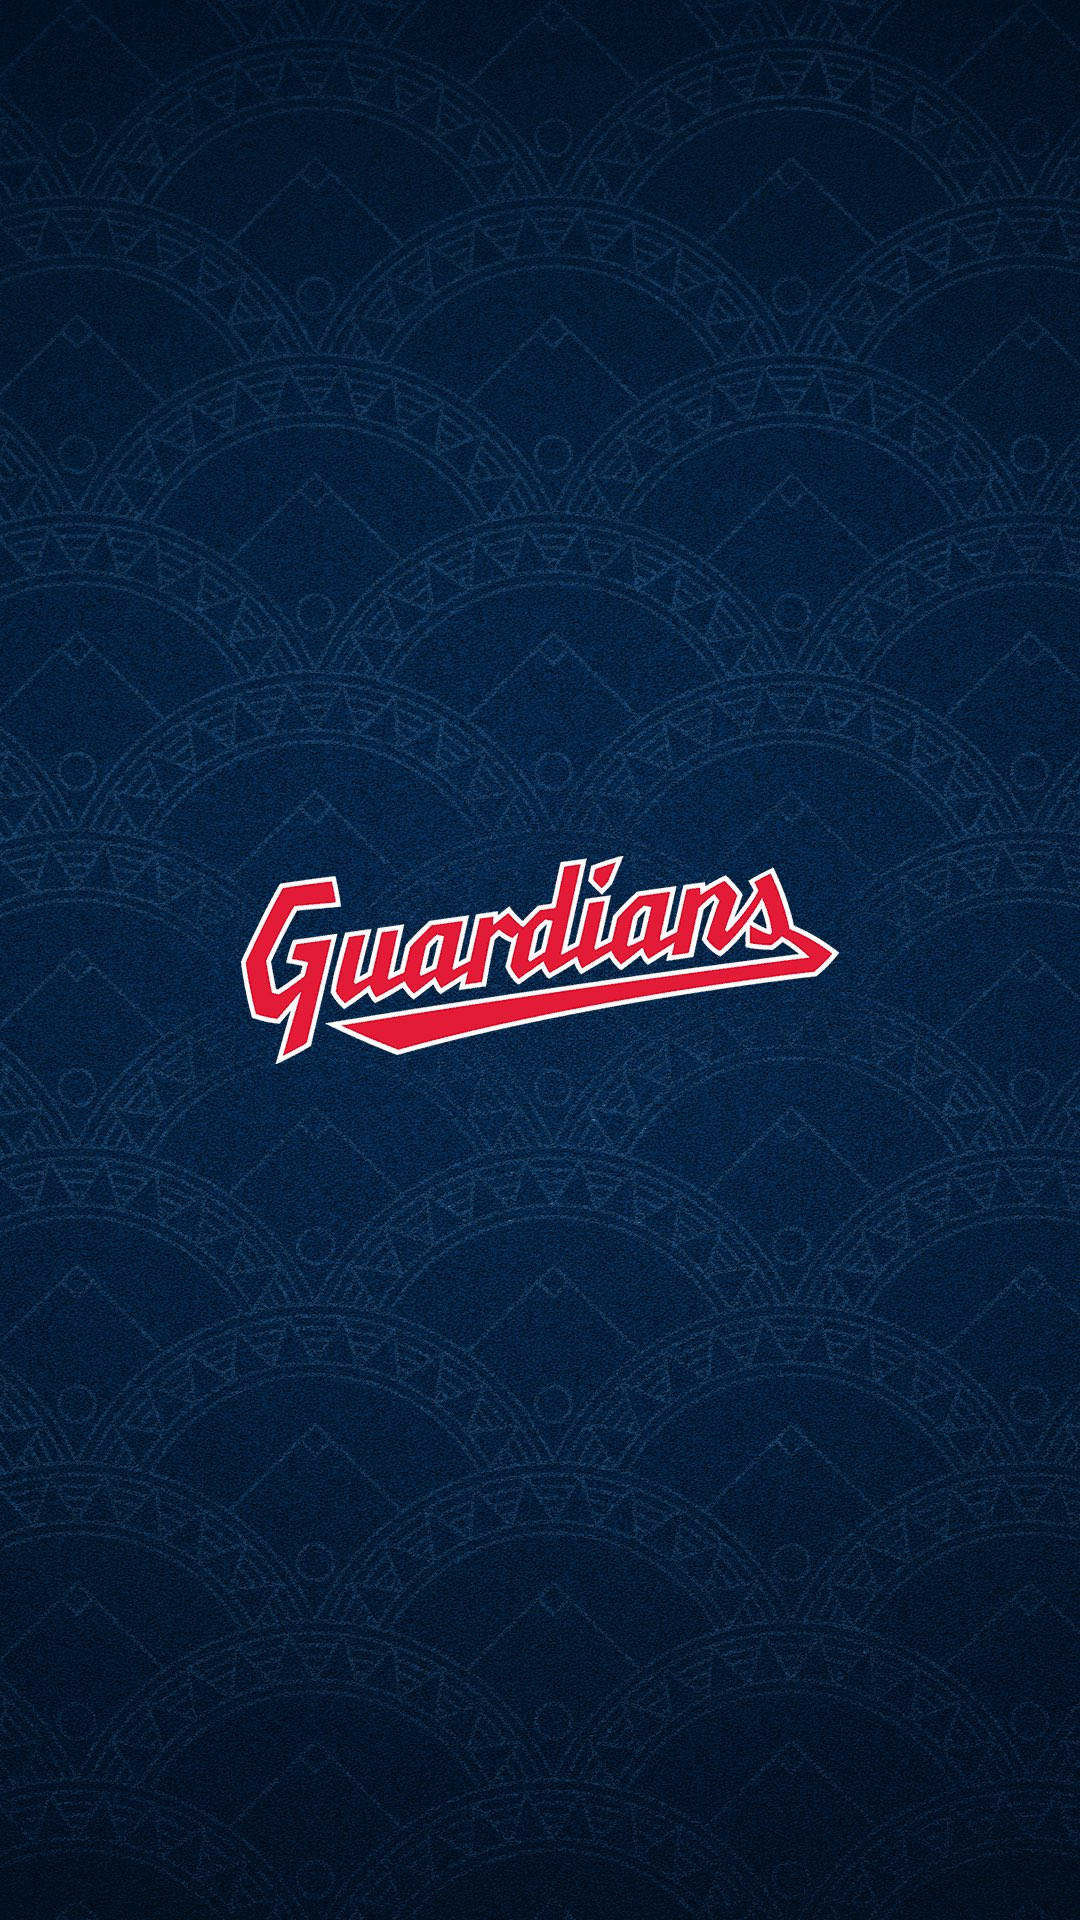 Cleveland Guardians Baseball Team Wordmark Background